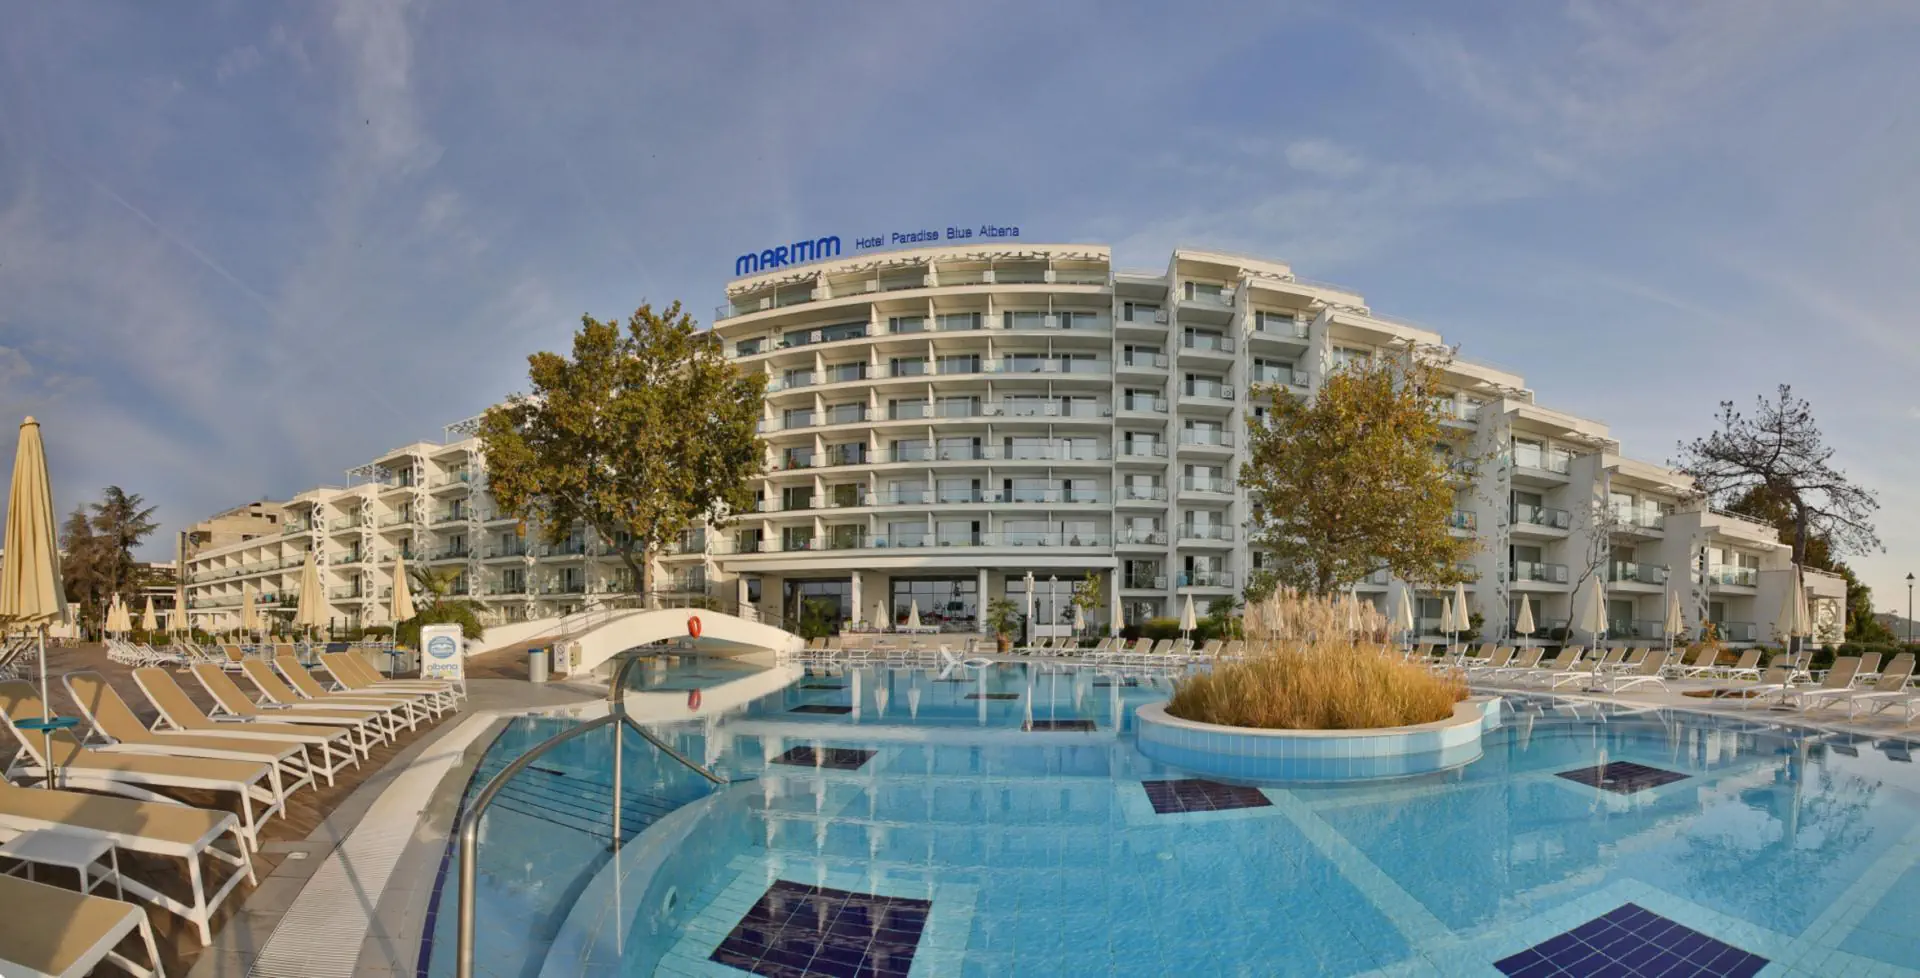 Bułgaria Złote Piaski Albena Maritim Hotel Paradise Blue Albena